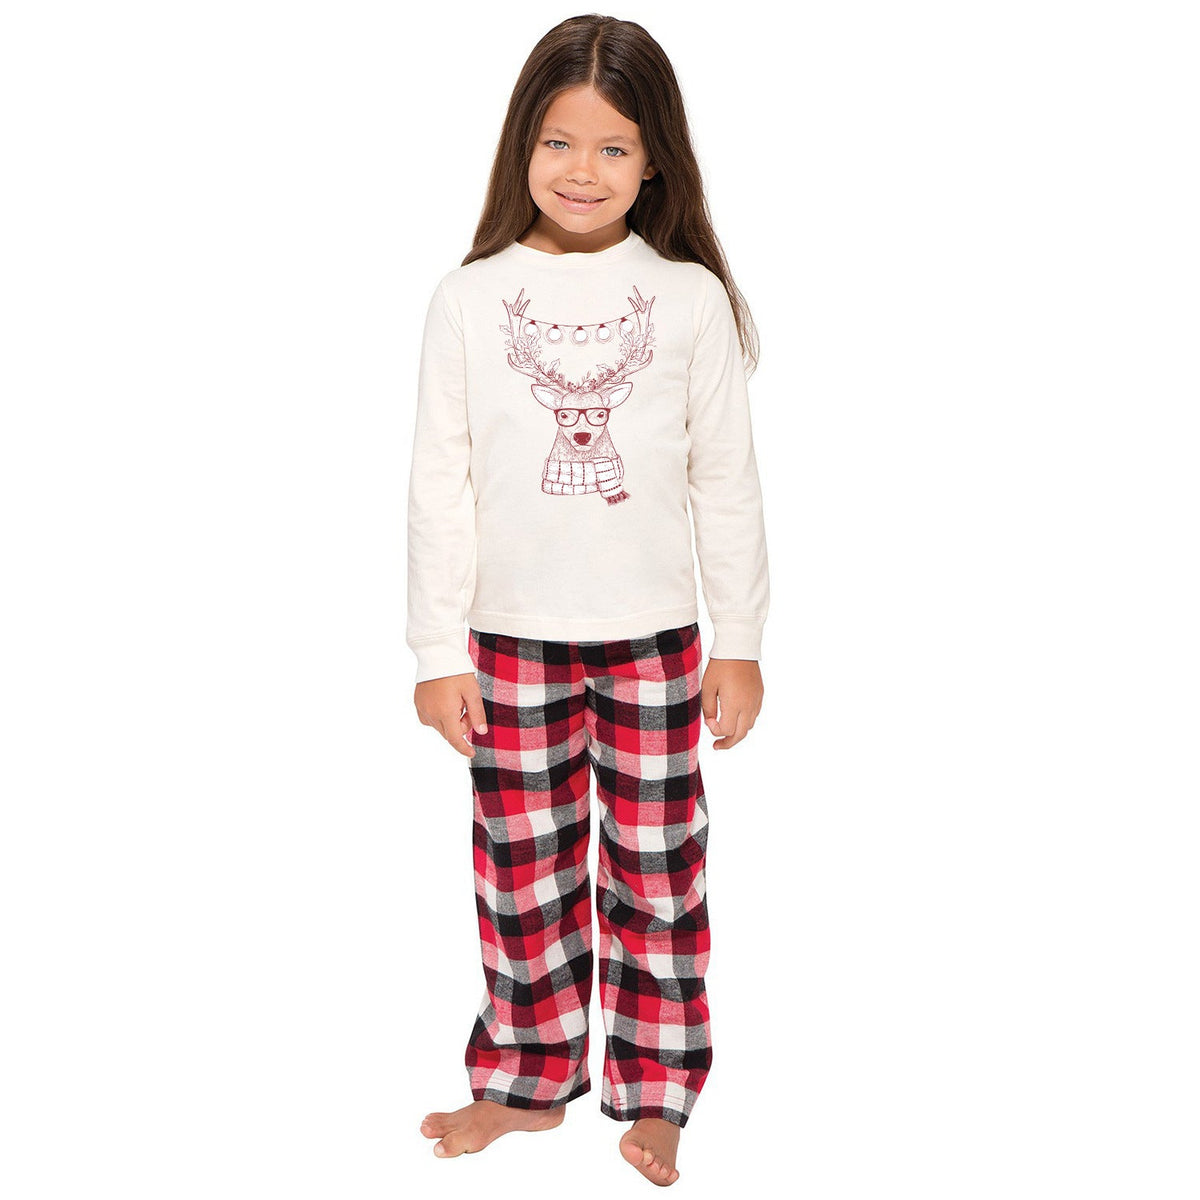 Christmas Family Matching Pajamas Sleepwear Sets Christmas White Deer Top and Red Plaids Pants 4